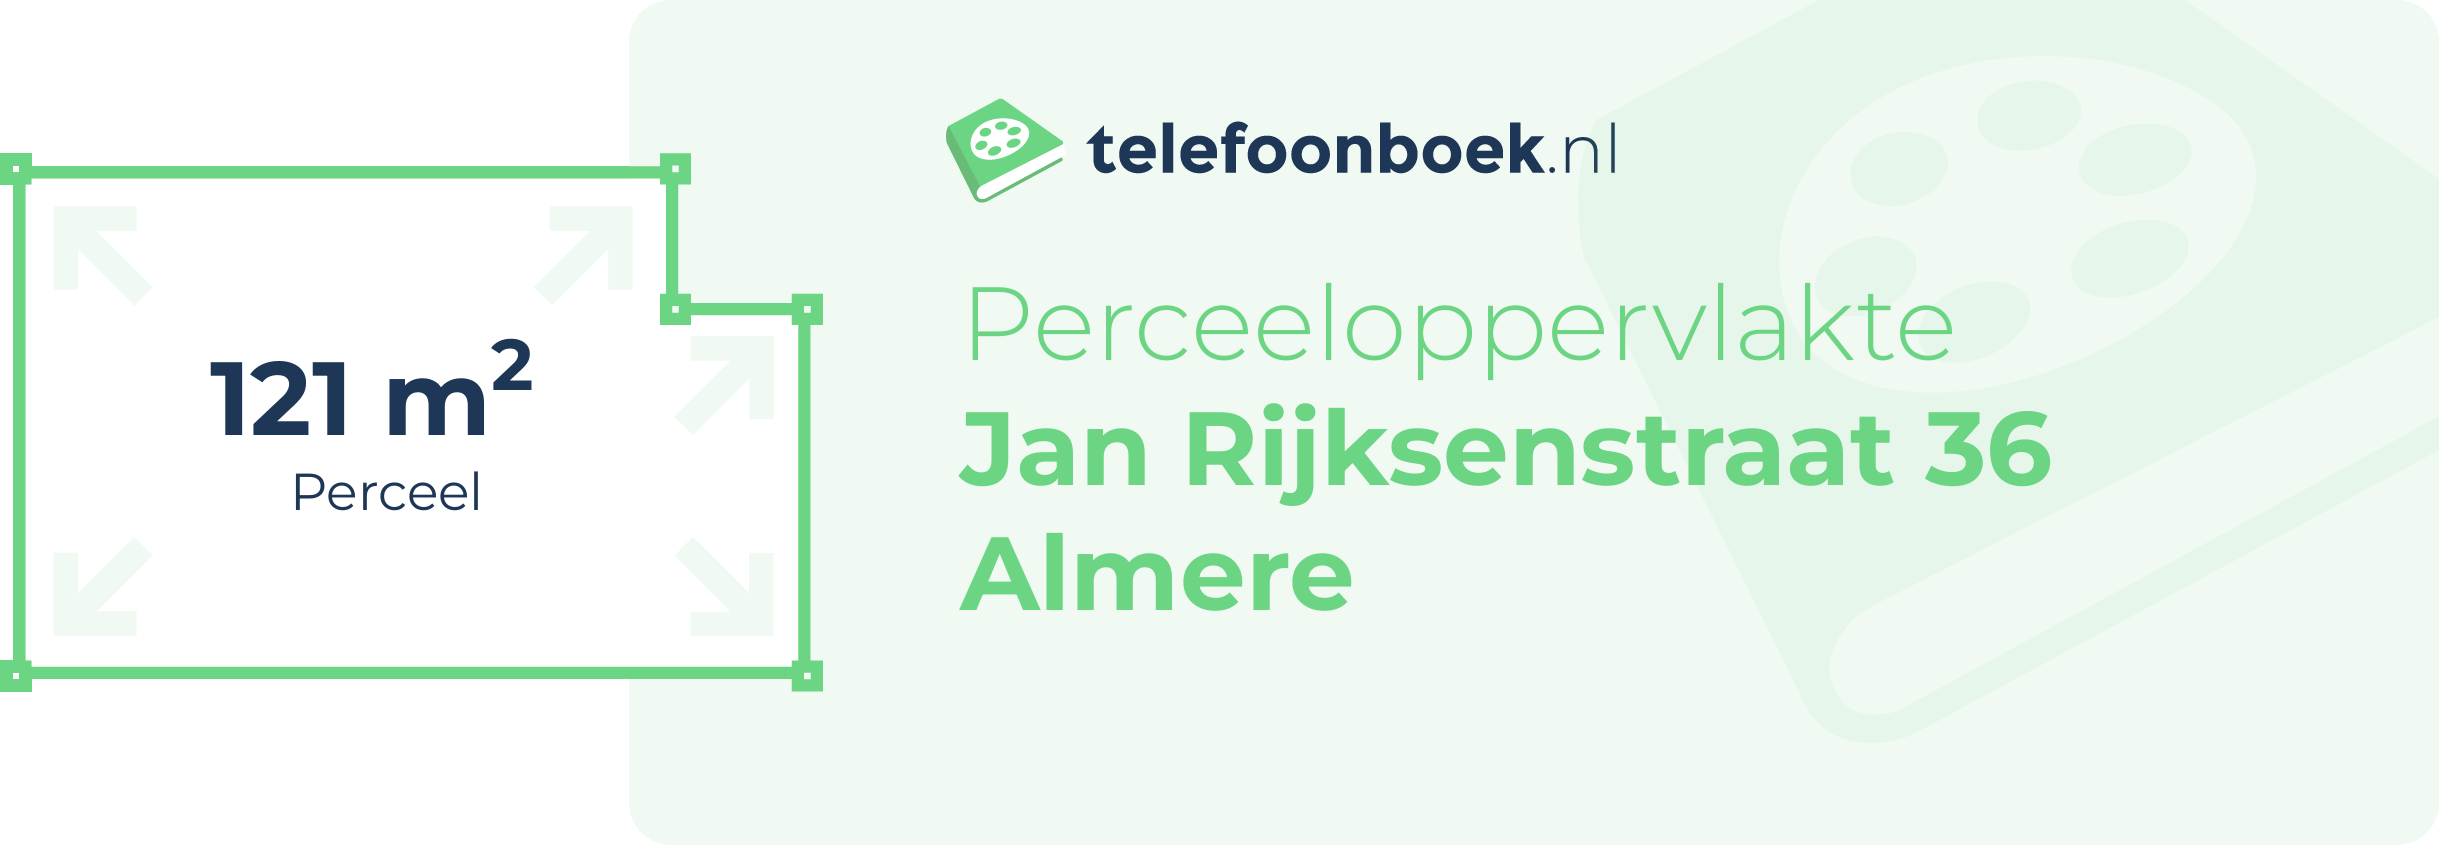 Perceeloppervlakte Jan Rijksenstraat 36 Almere